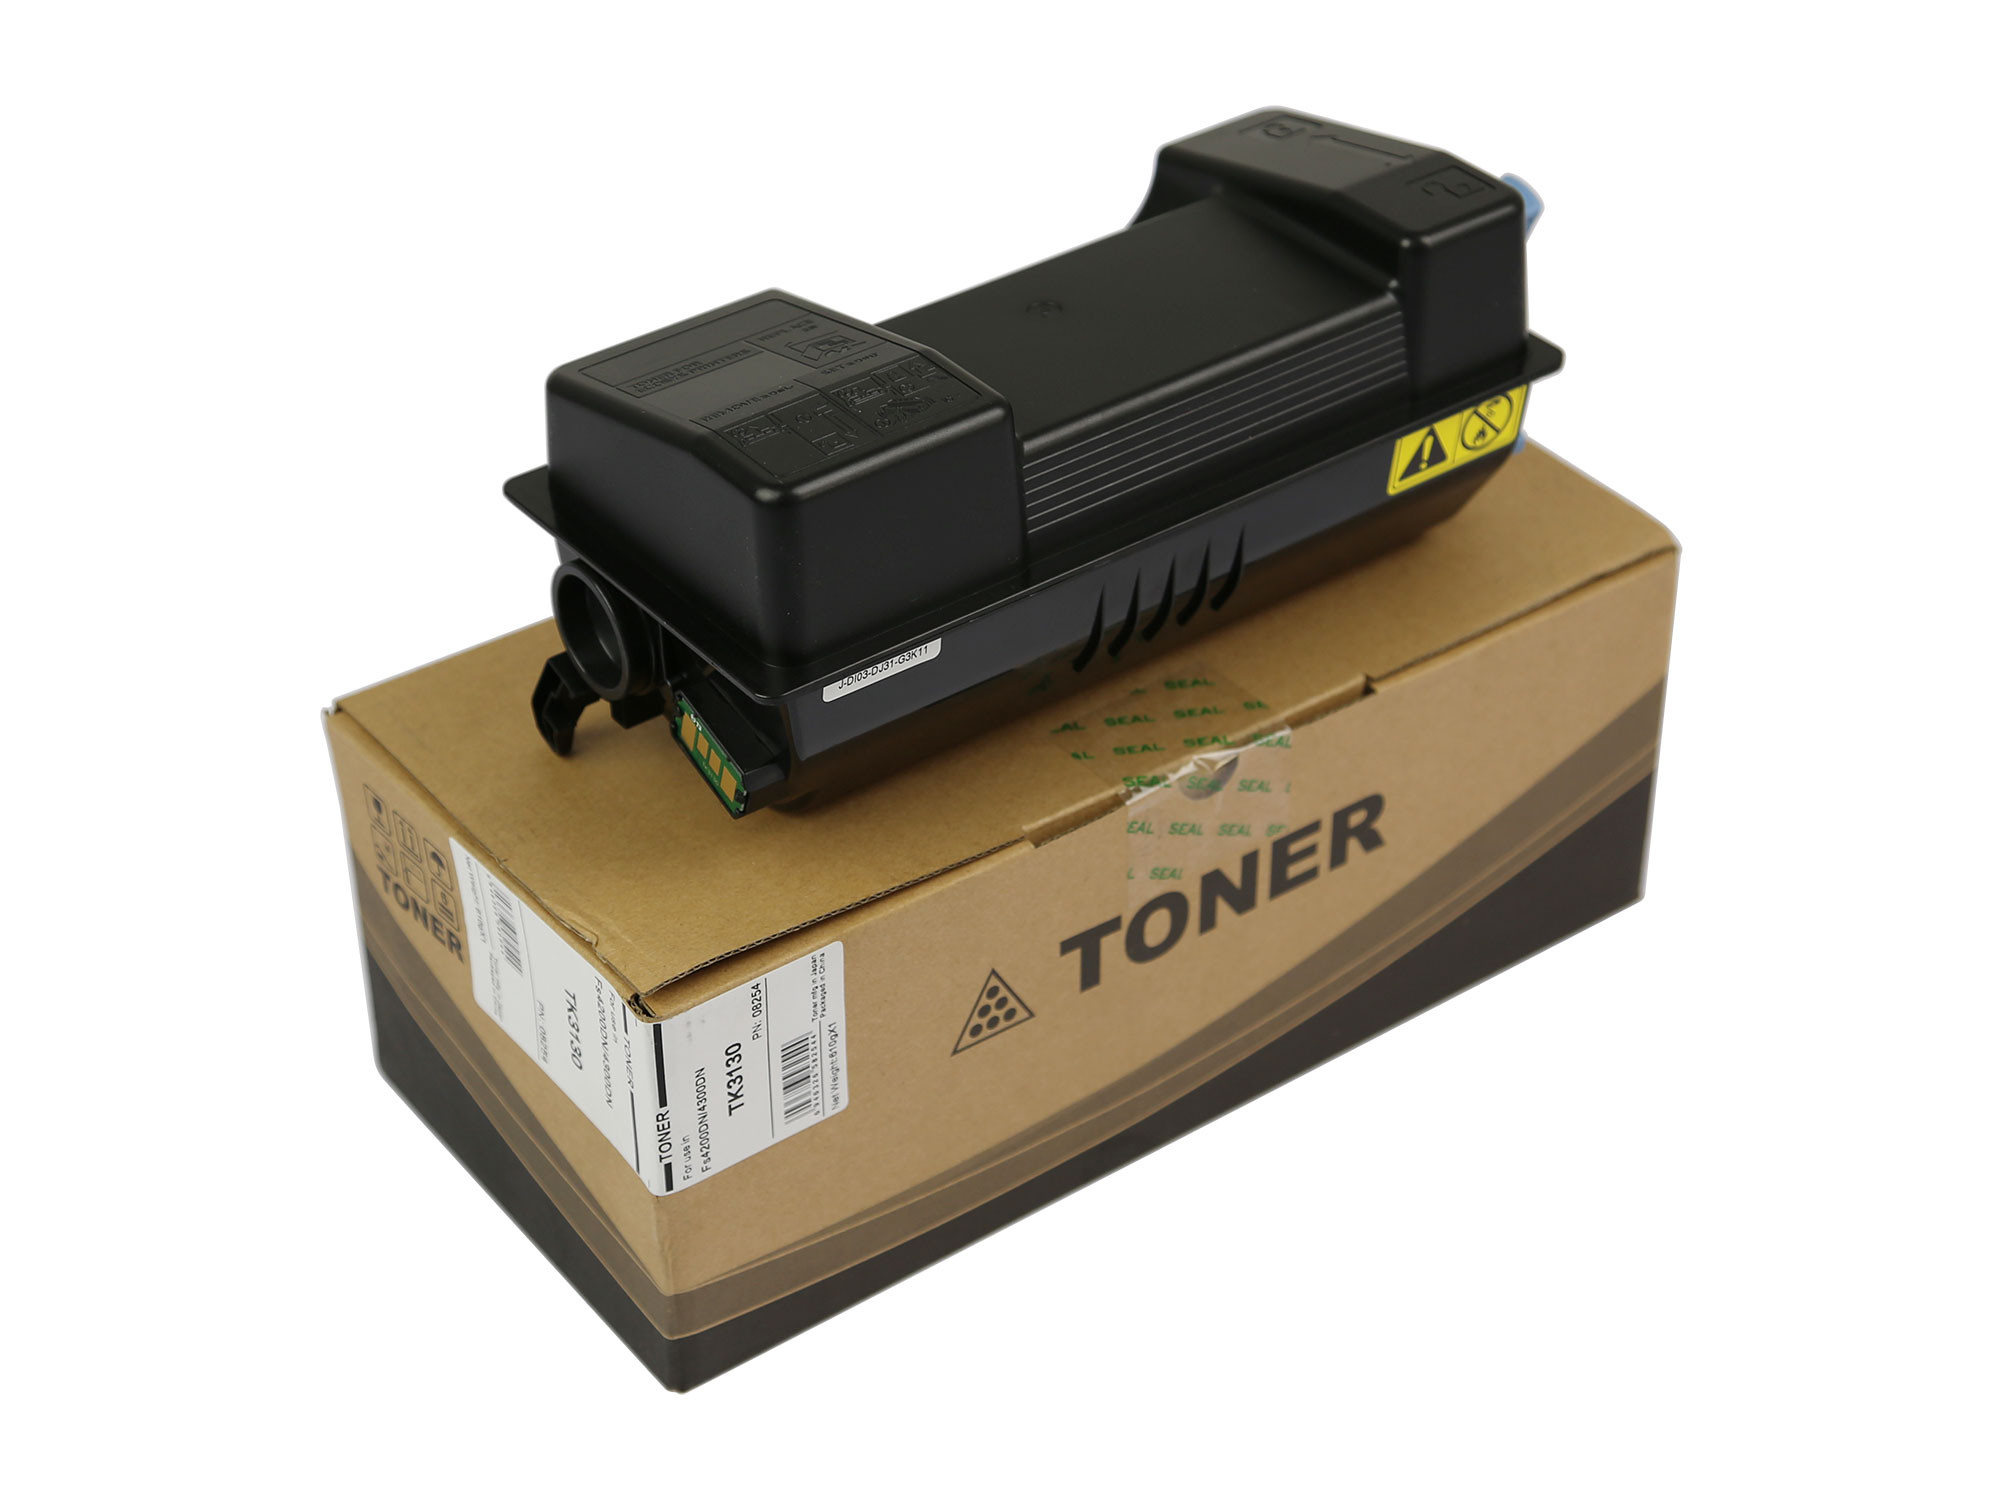 TK-3130 Toner Cartridge for Kyocera ECOSYS M3550idn